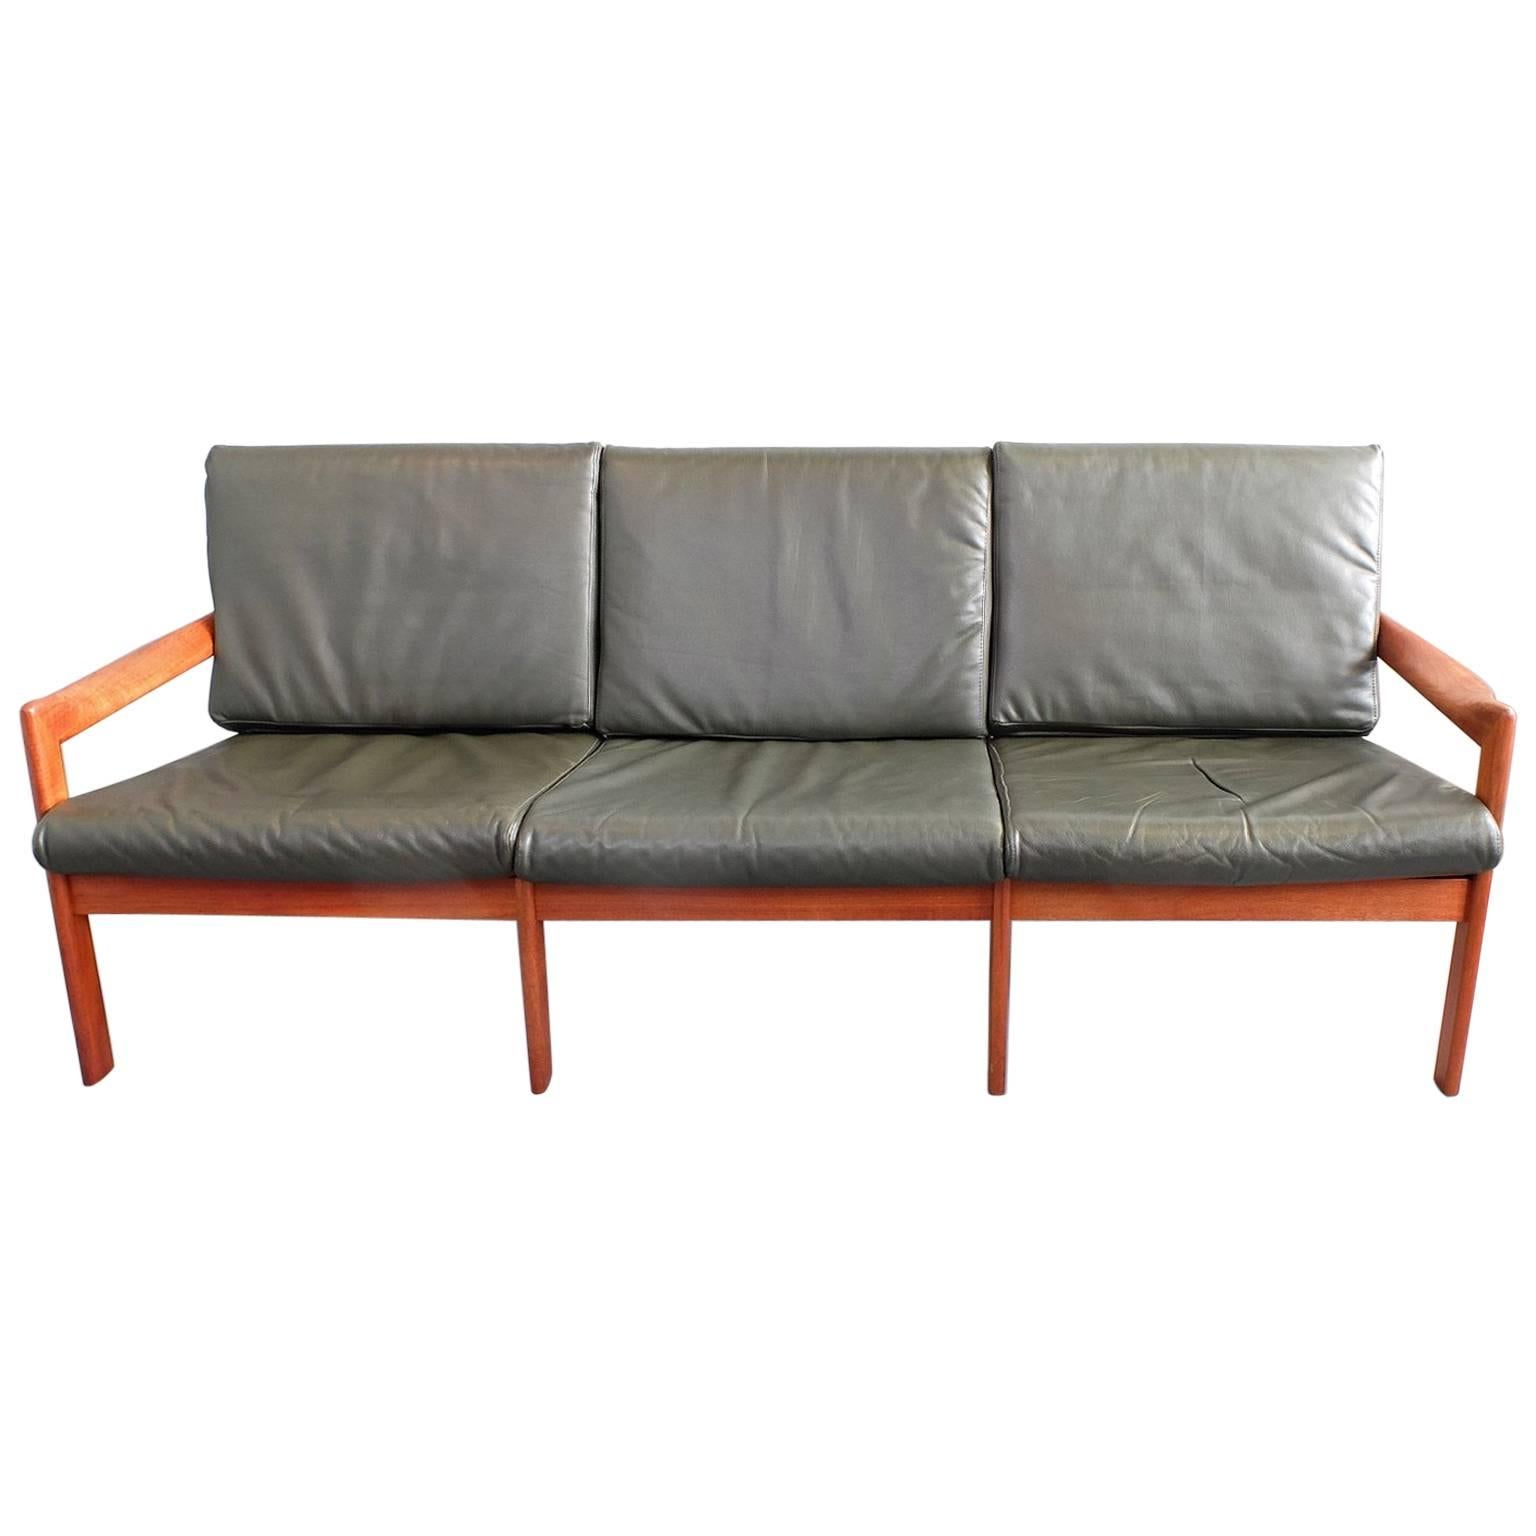 Illum Wikkelso Three Seat Teak Sofa, Danish, 1960s, Produced by Eilersen